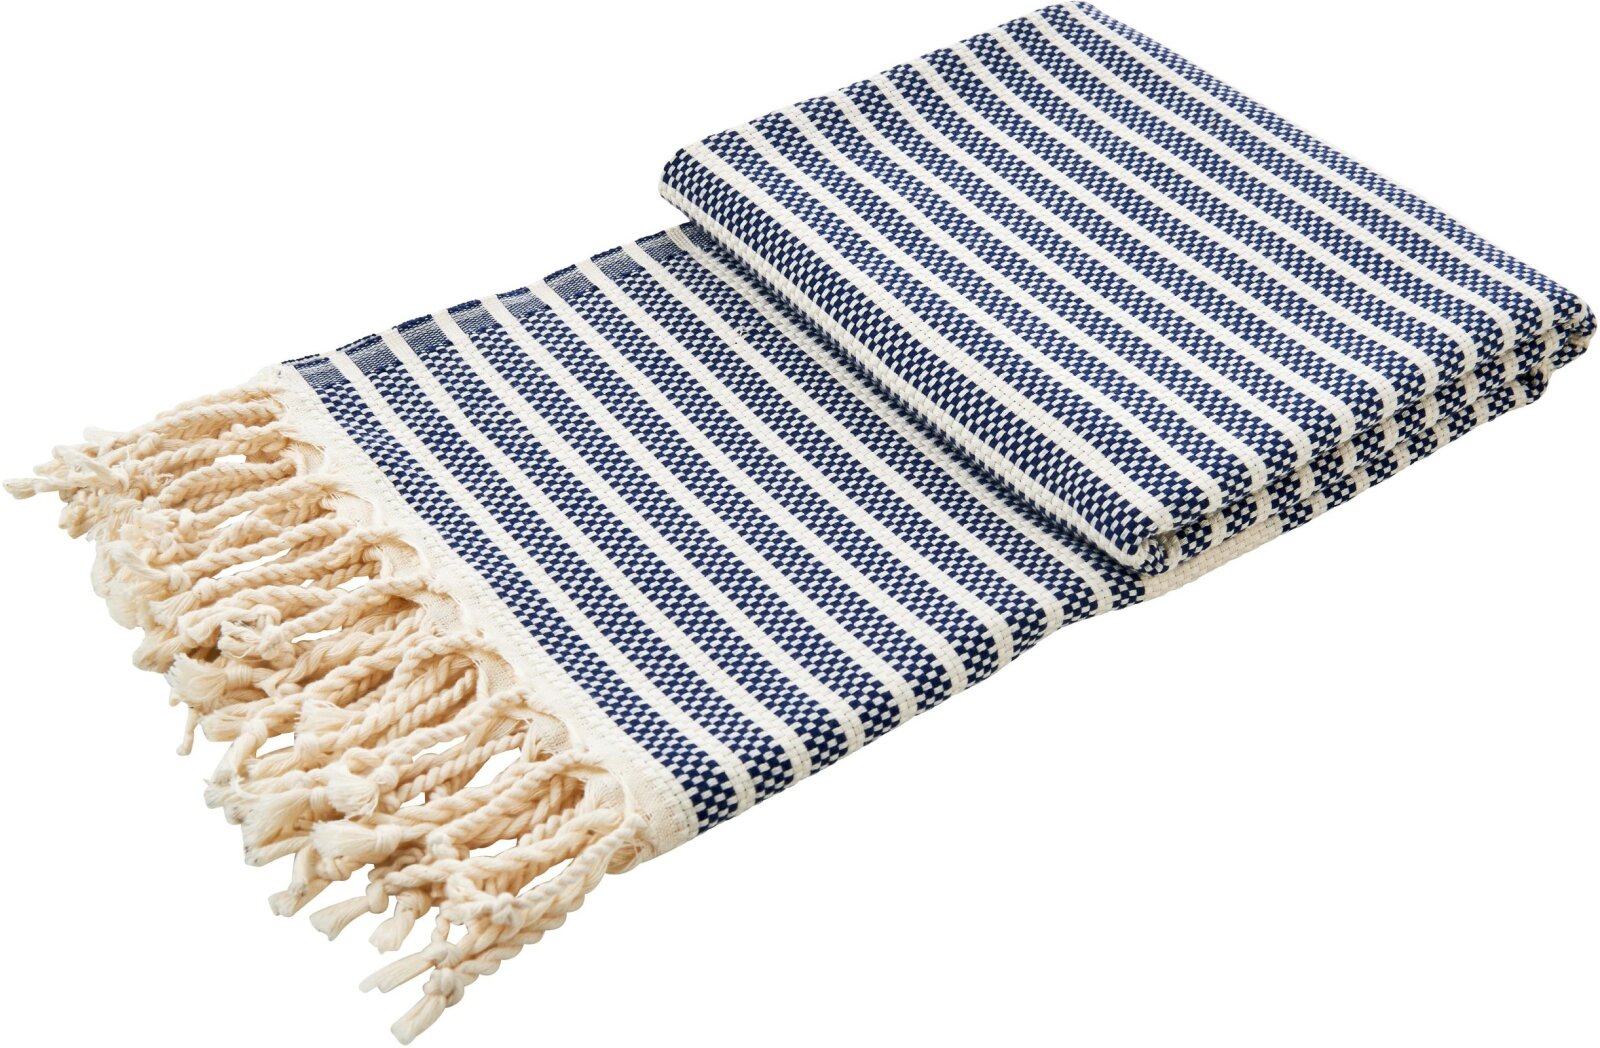 H.O.C.K. Decke Lovely Stripes mit hock-dich-hin.de, 100x180cm 16,90 navy-blau Fransen € 